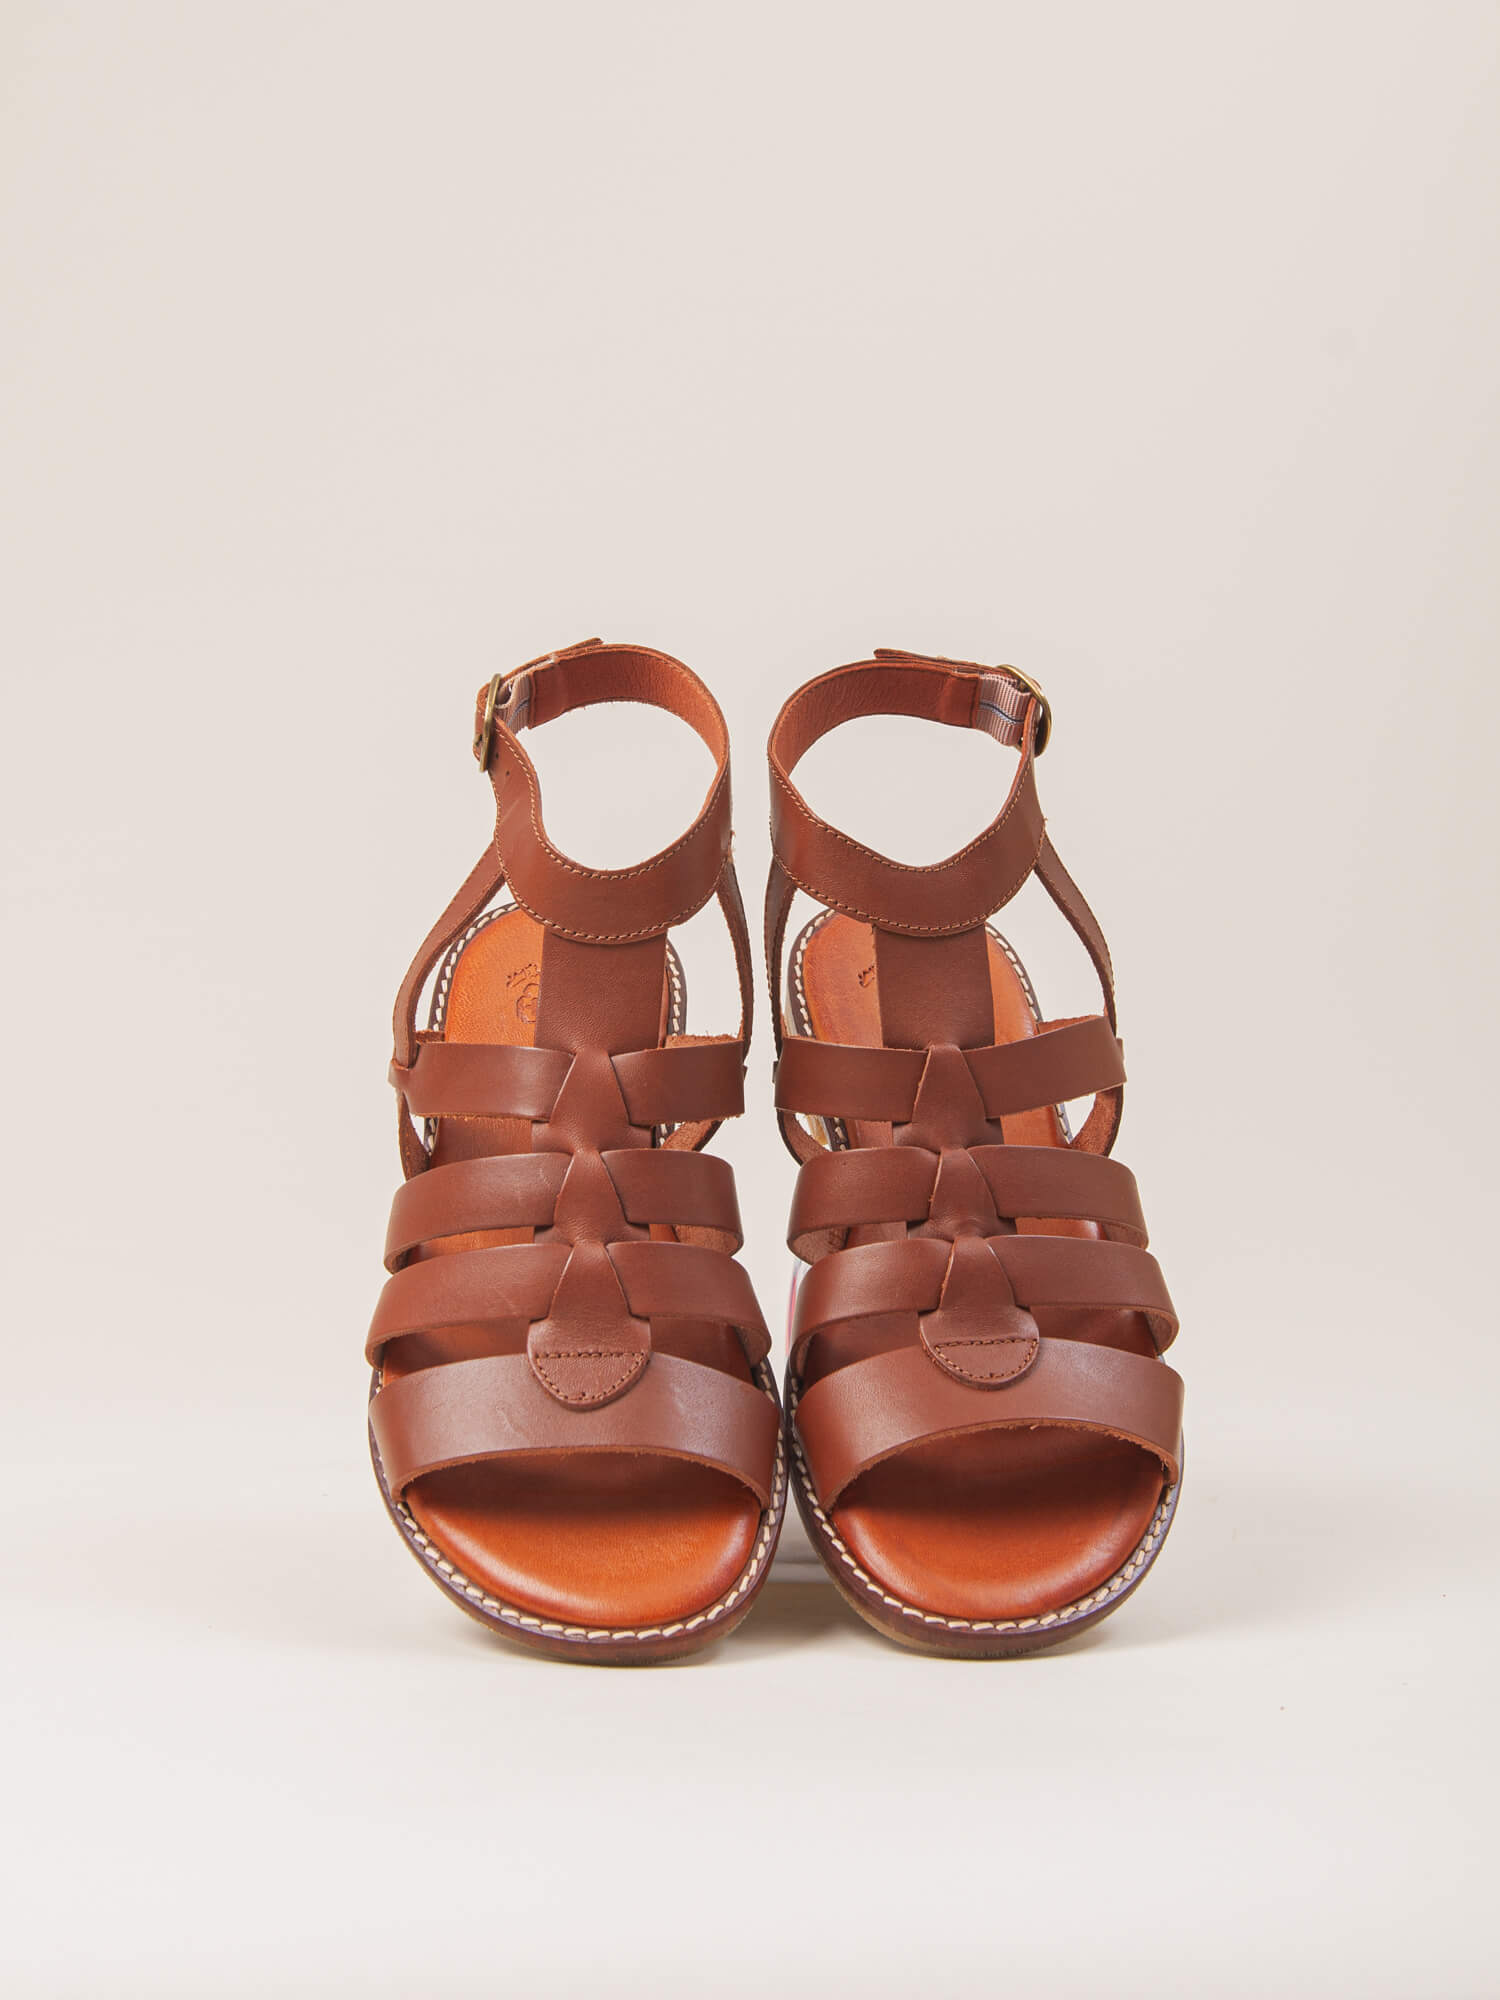 Sandalia estilo romana. Zapato de mujer cómodo y elegante.